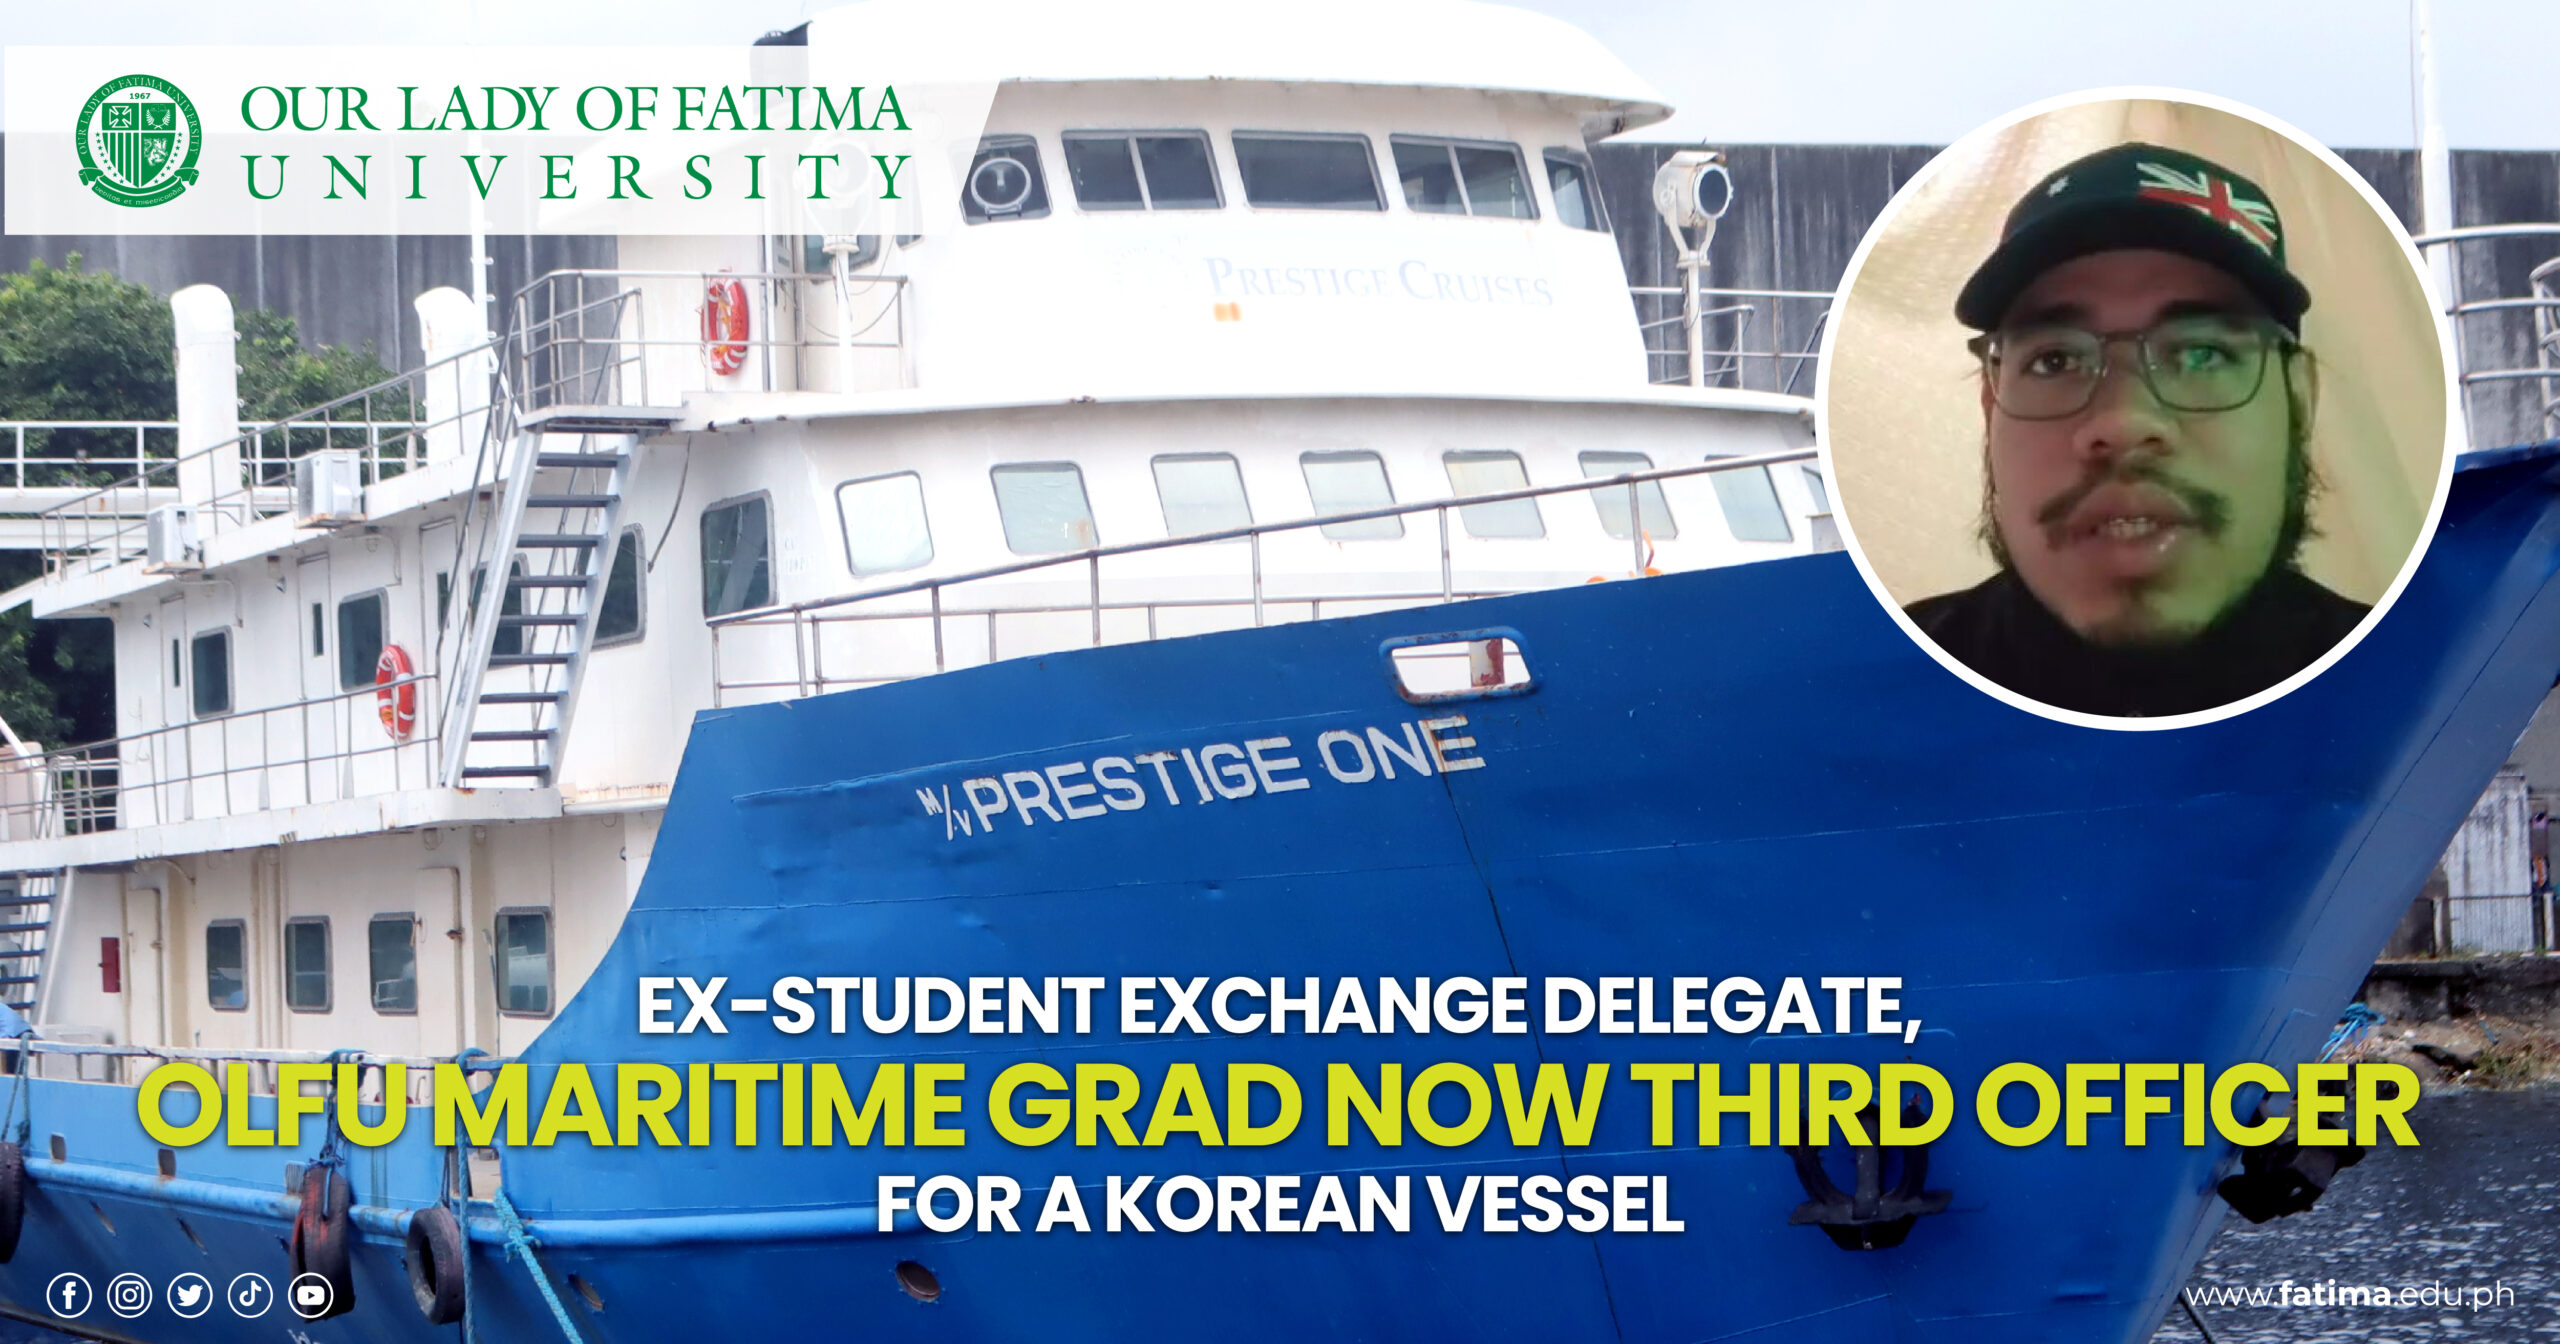 Ex-student exchange delegate, OLFU maritime grad now third officer for a Korean vessel